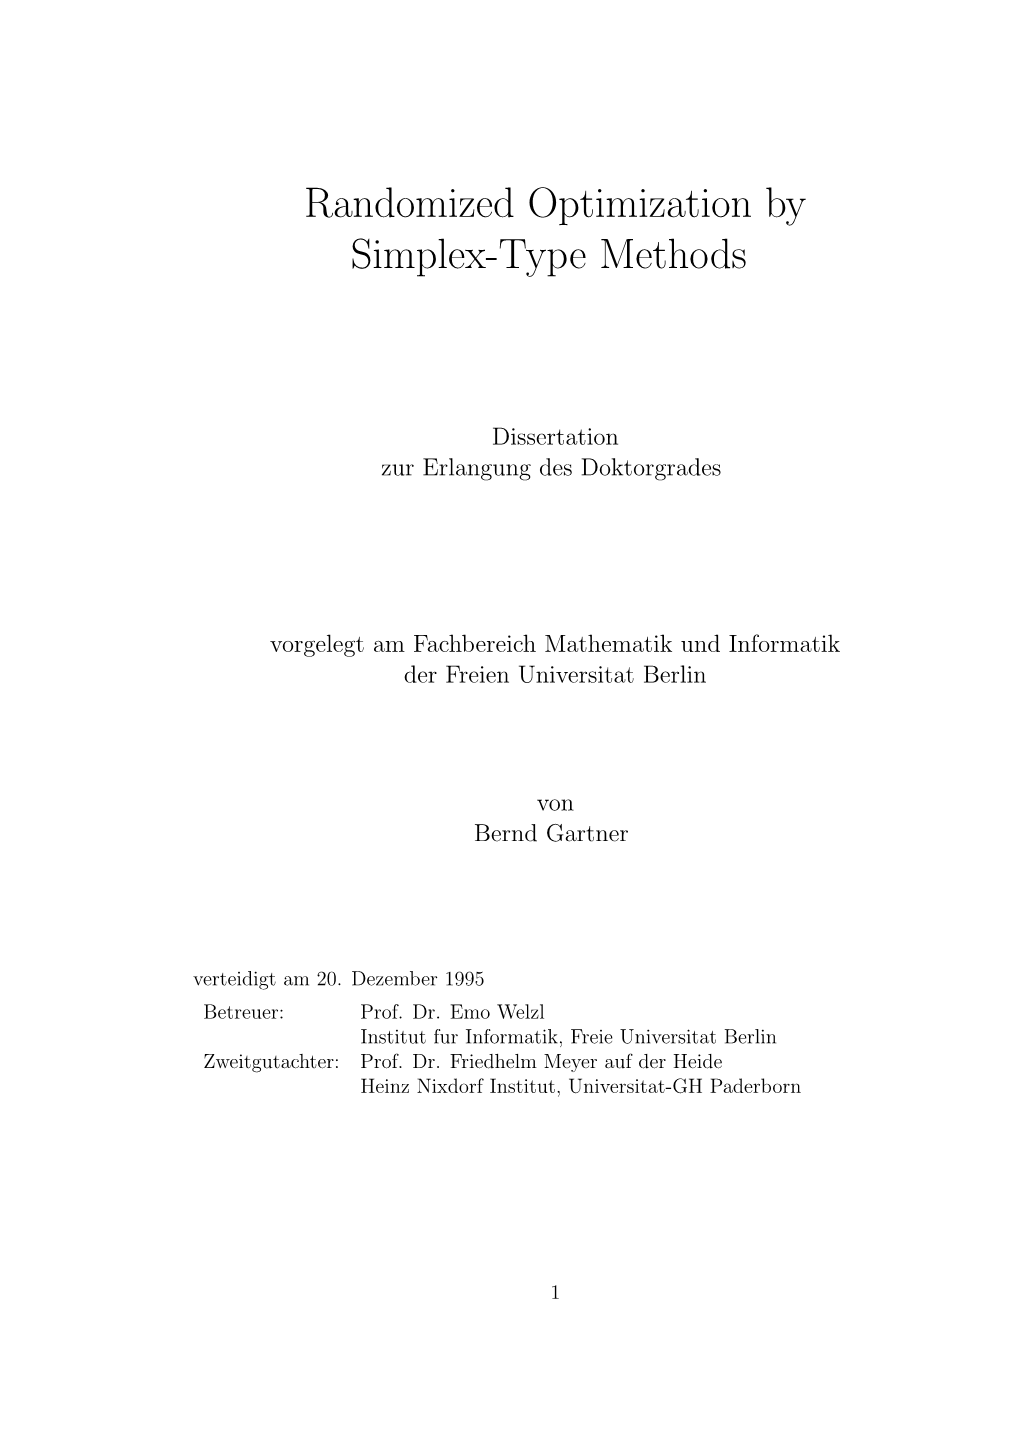 Randomized Optimization by Simplex-Type Methods